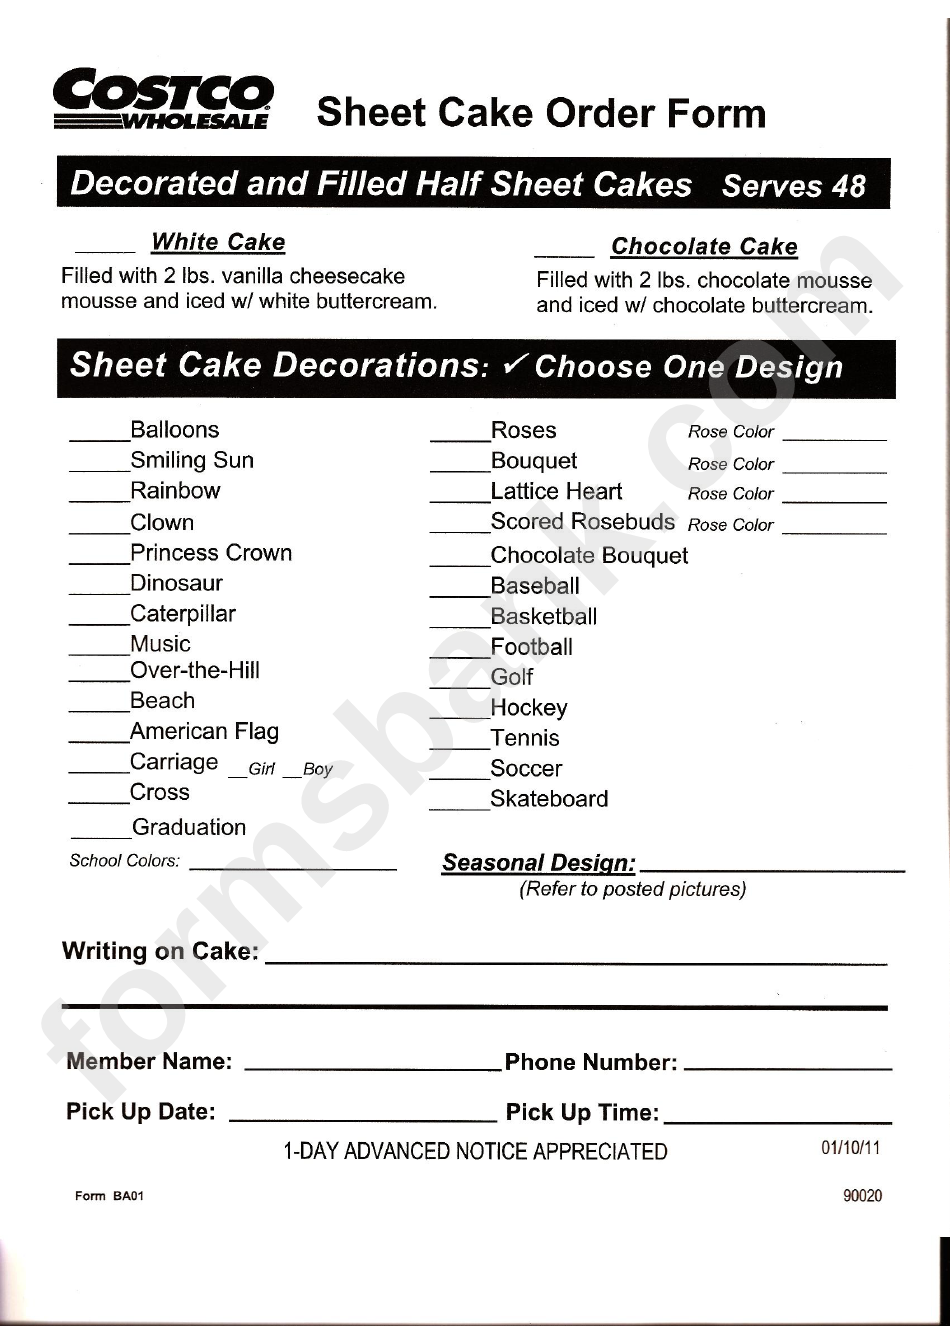 Form Ba01 - Sheet Cake Order Form - Costco